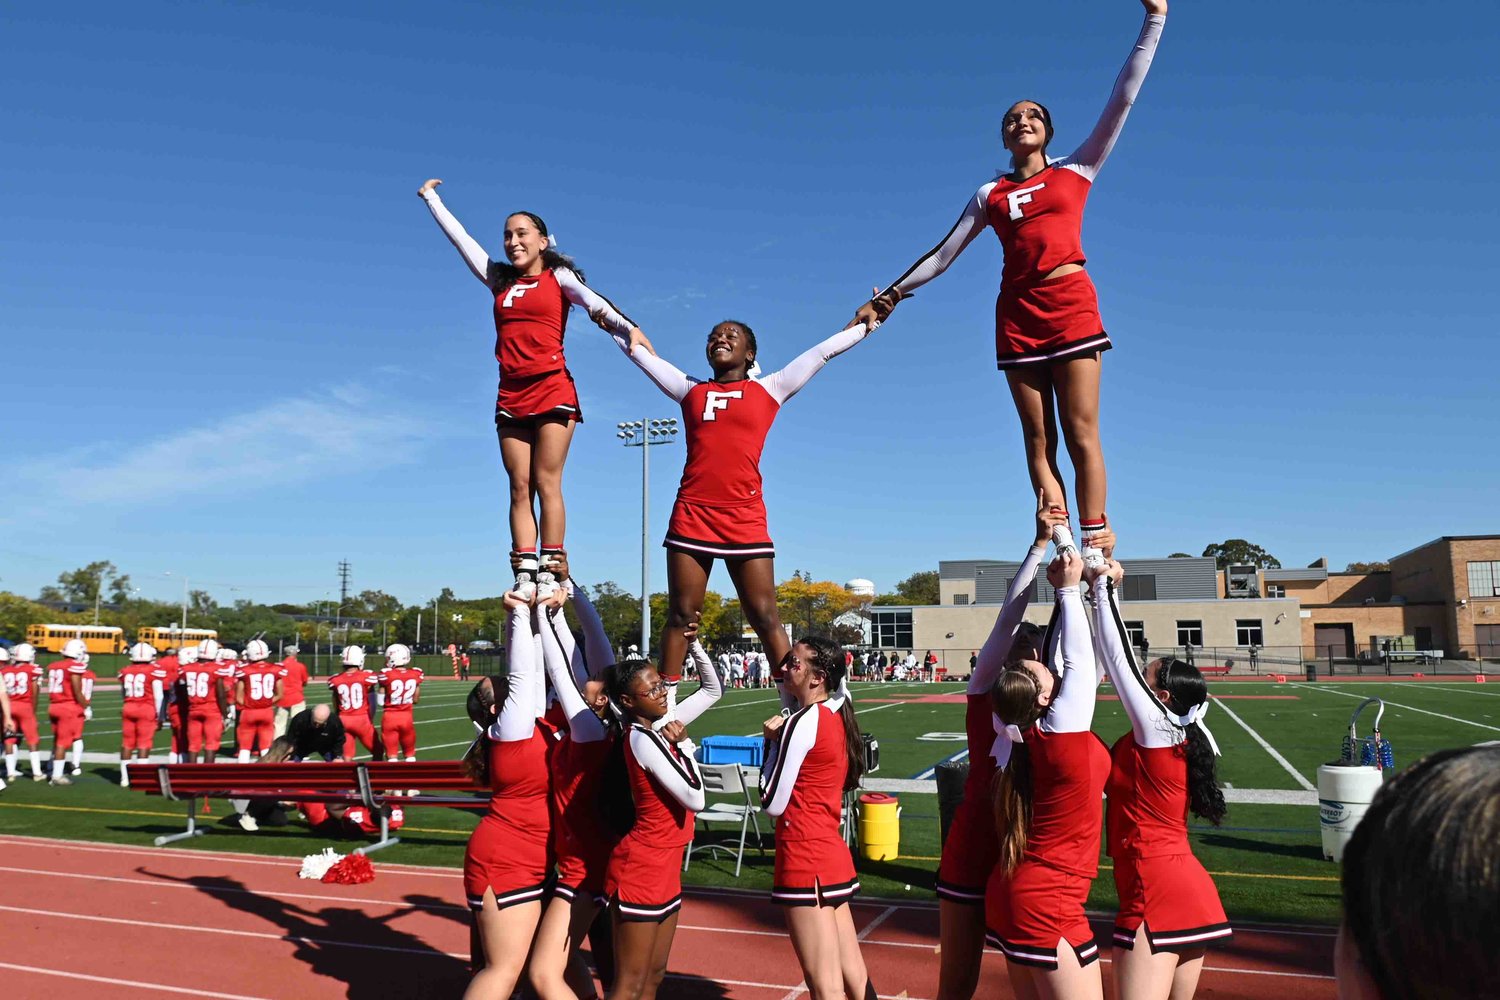 Freeport High School cheerleaders kept spirits high during homecoming.